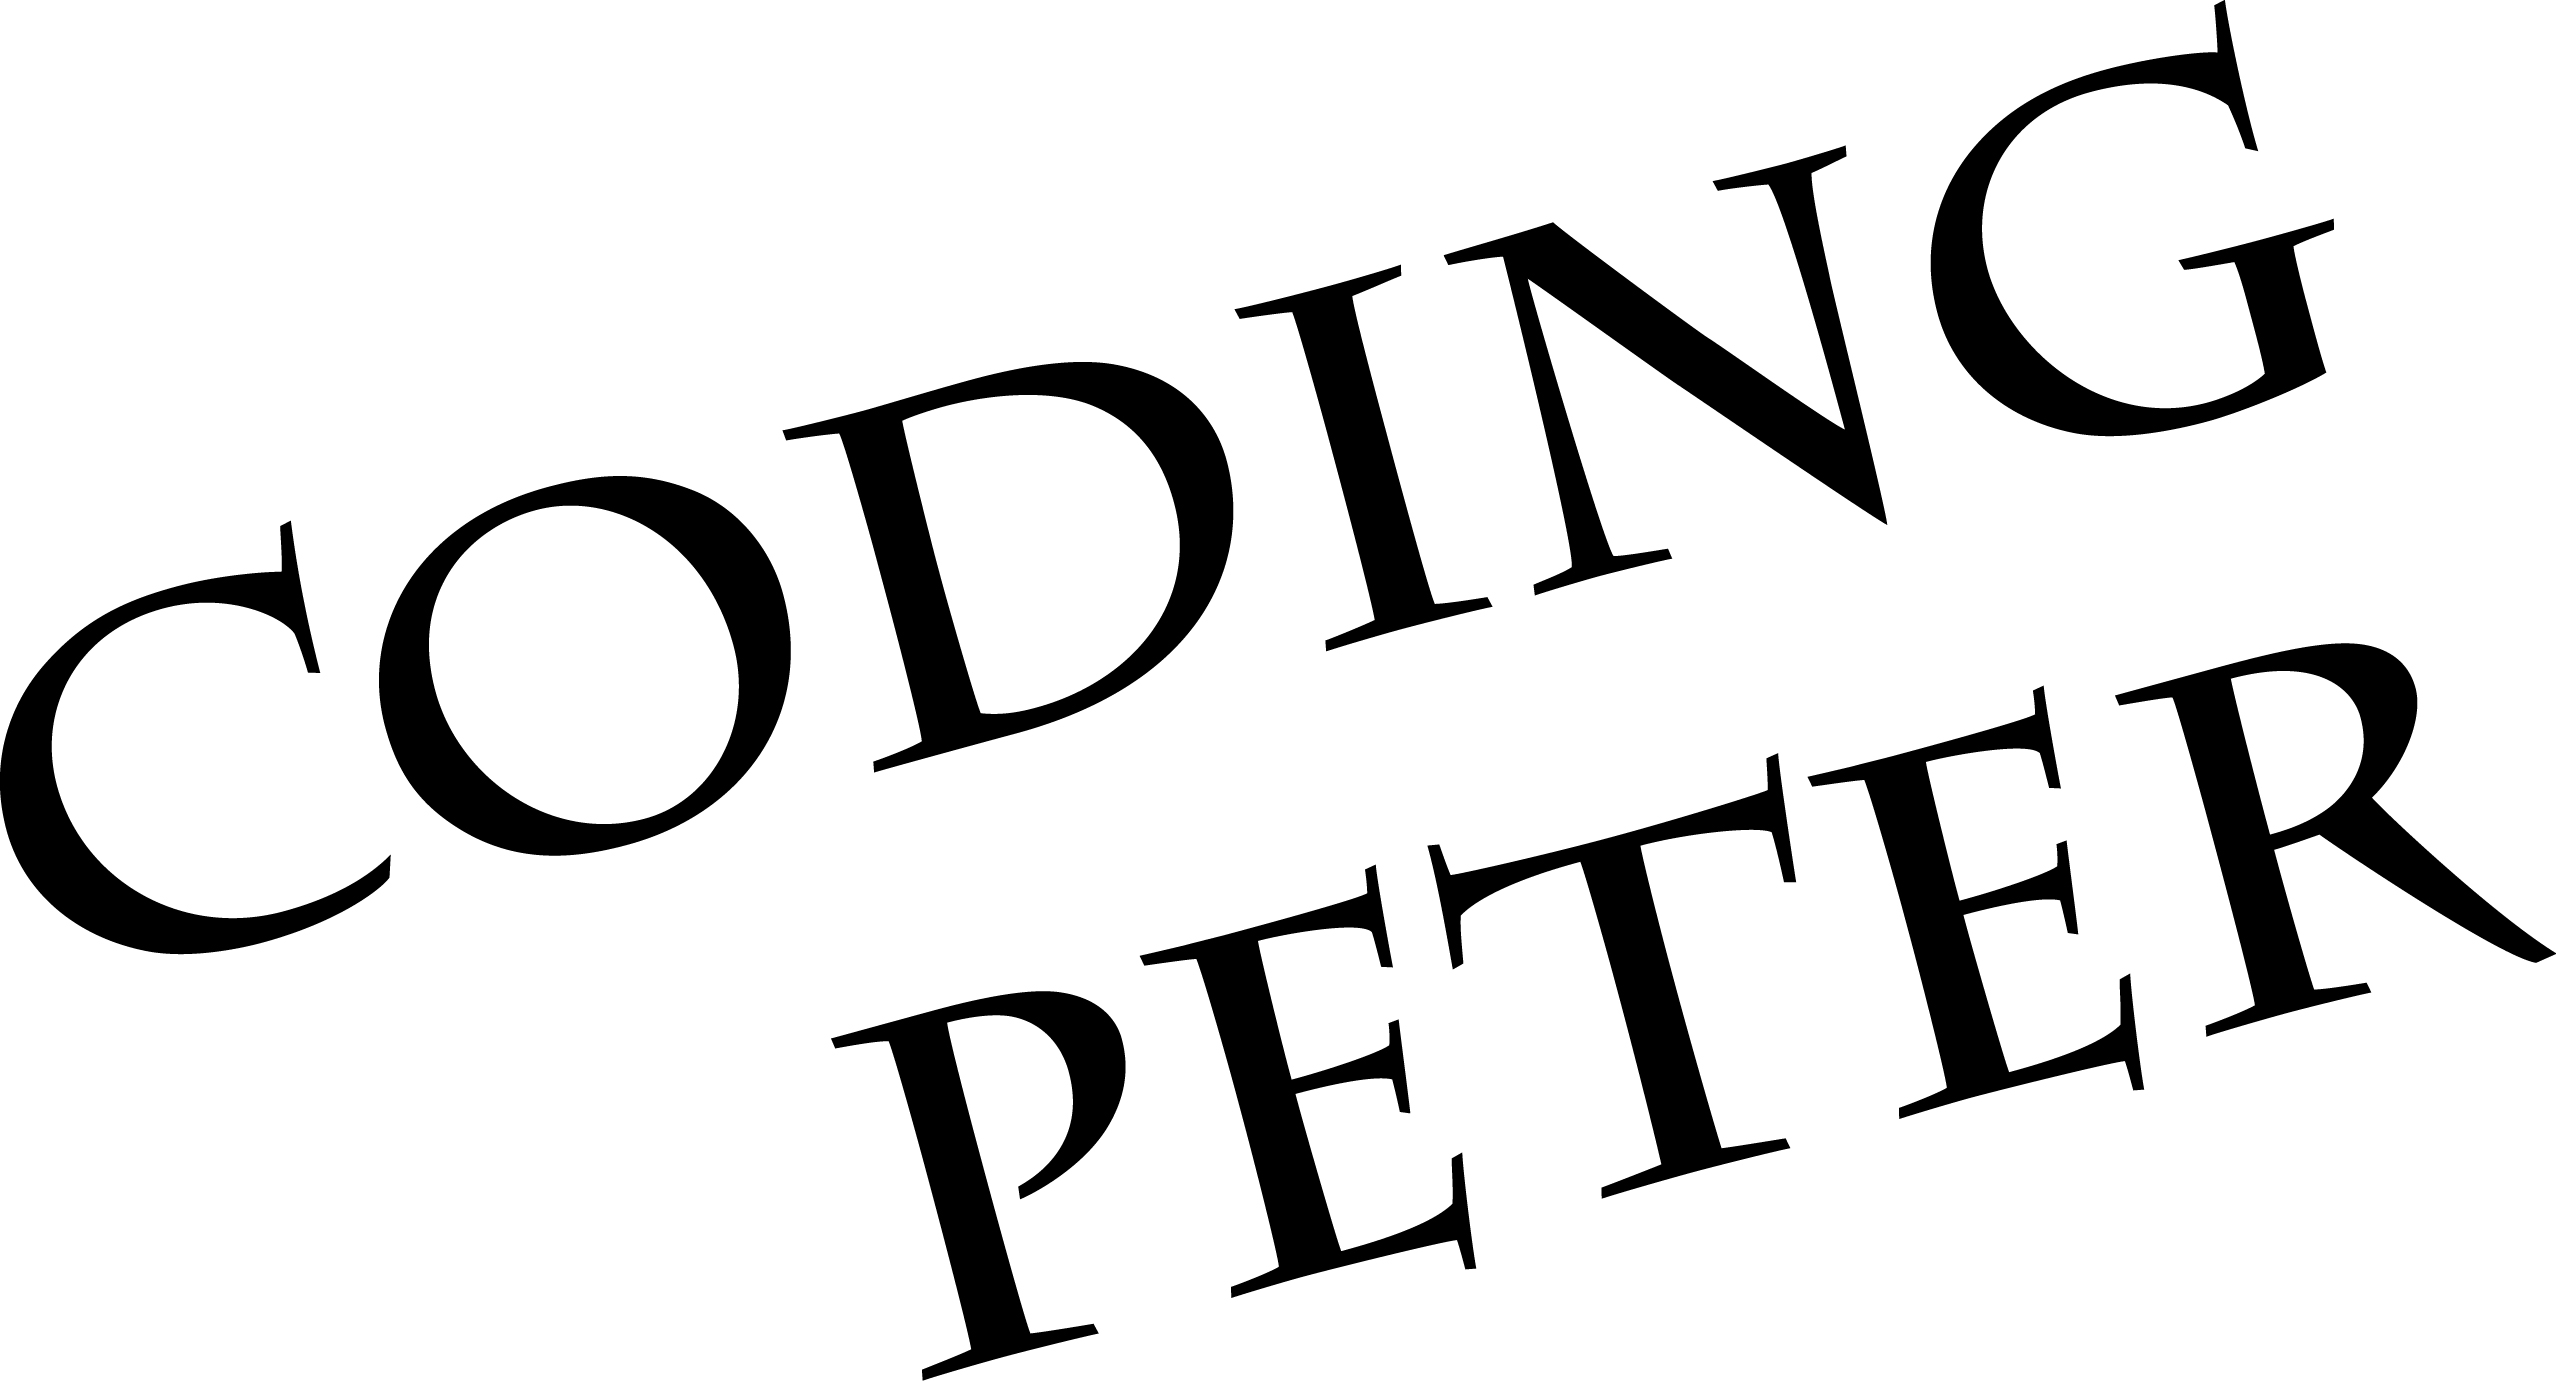 Coding Peter